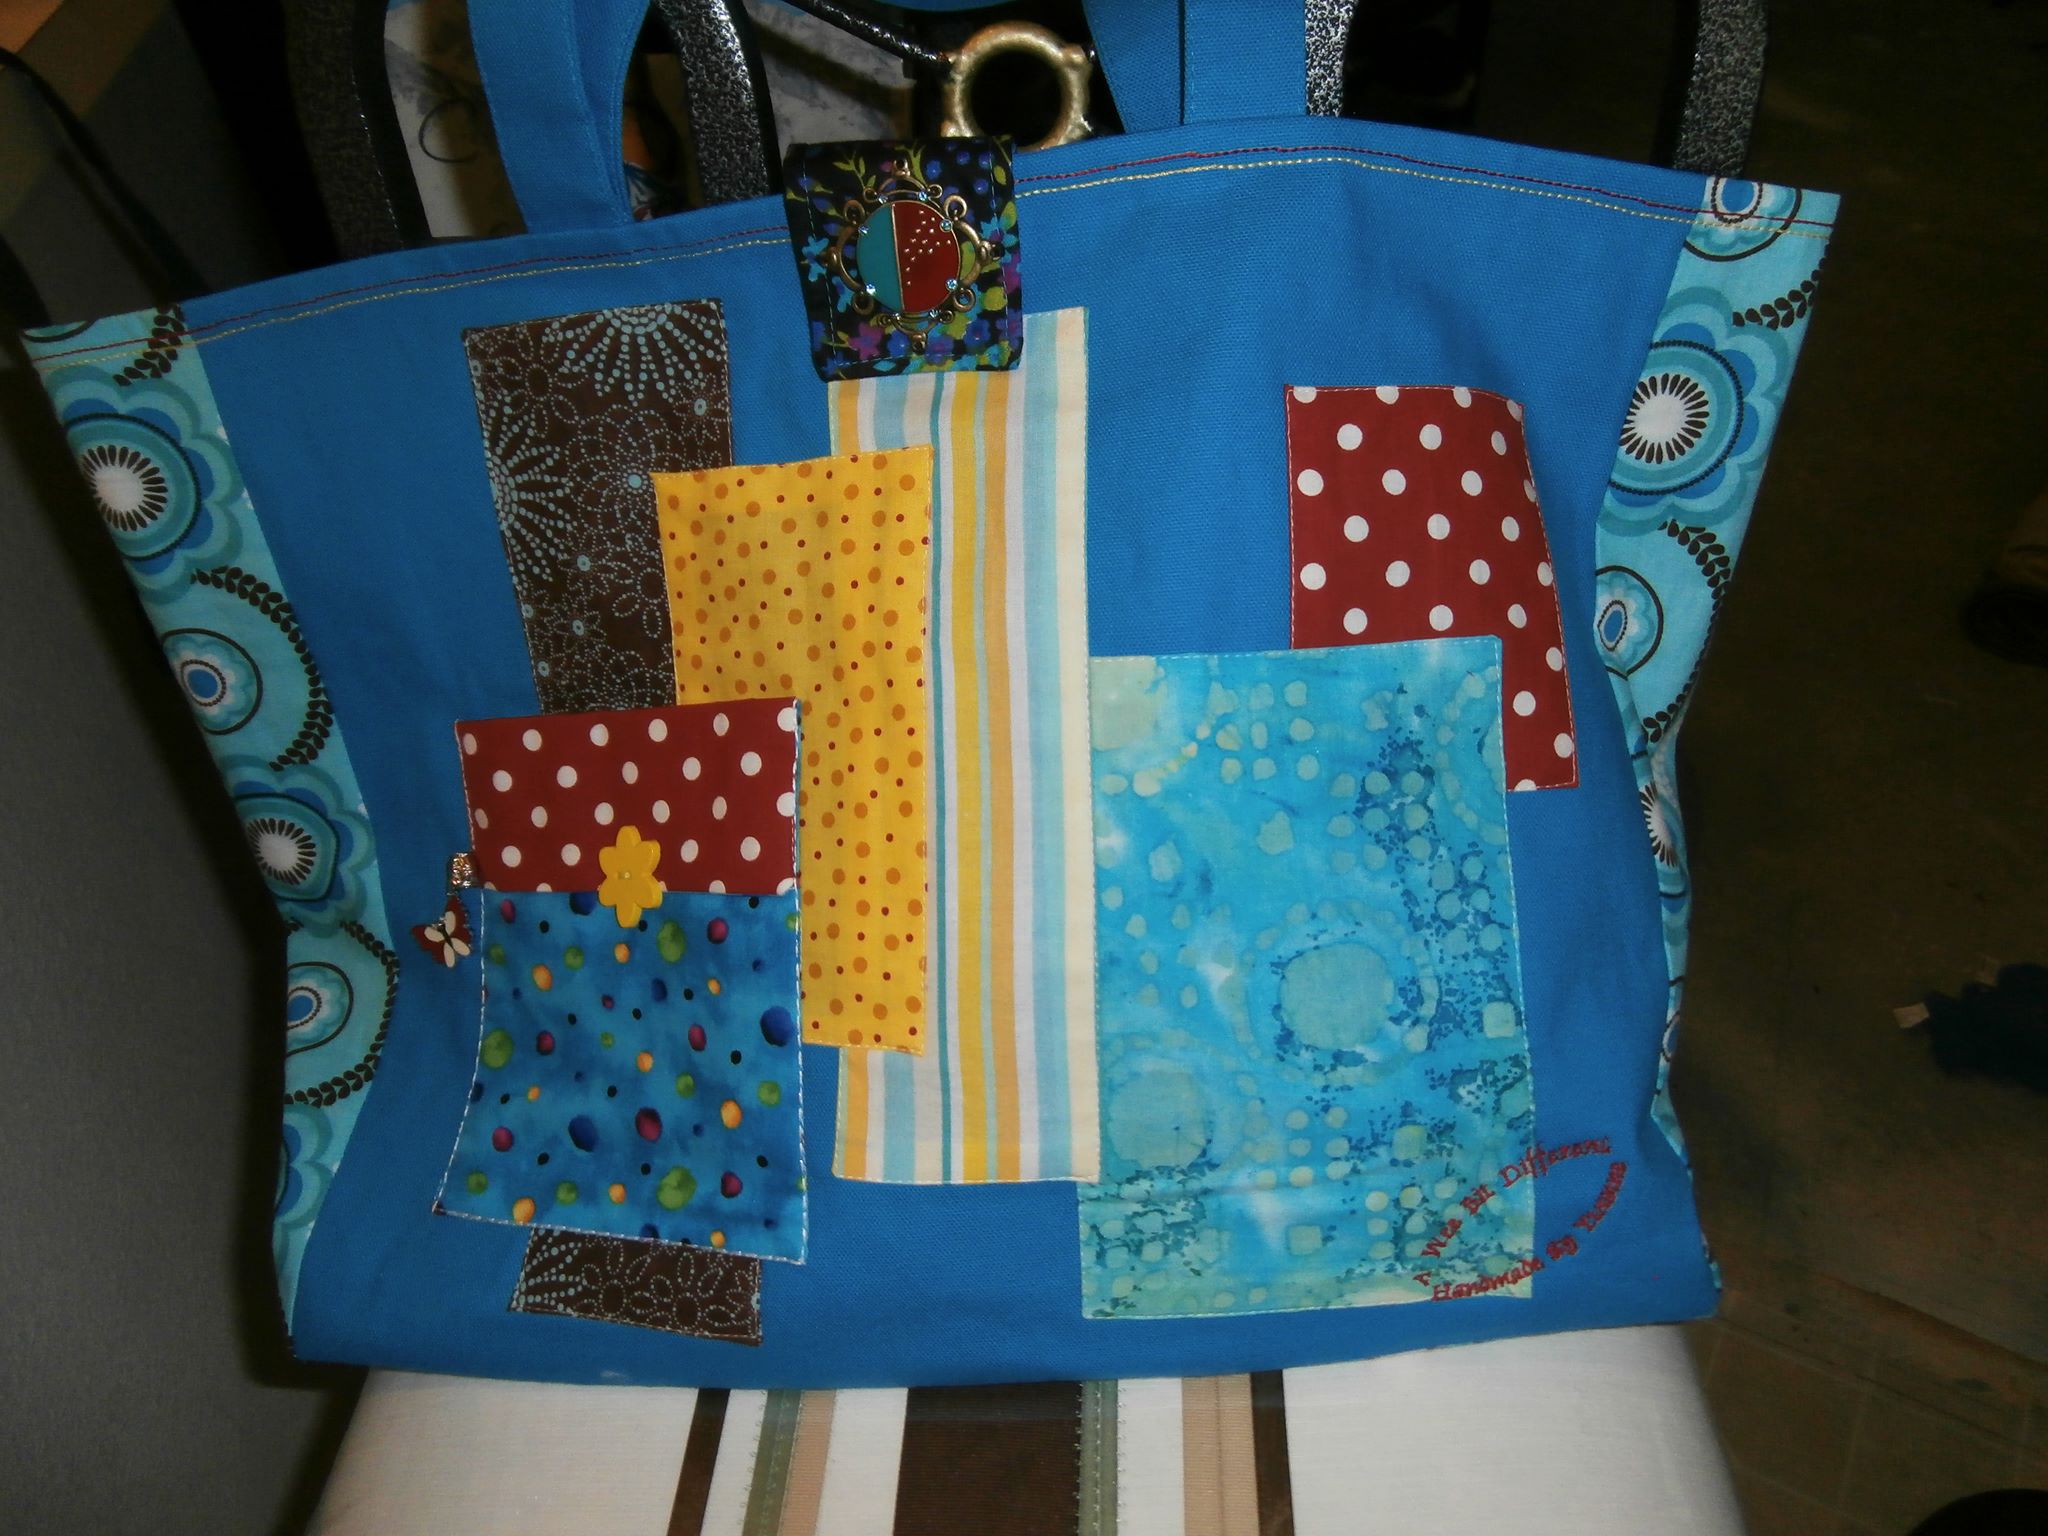 Handbags, purses and travel bags